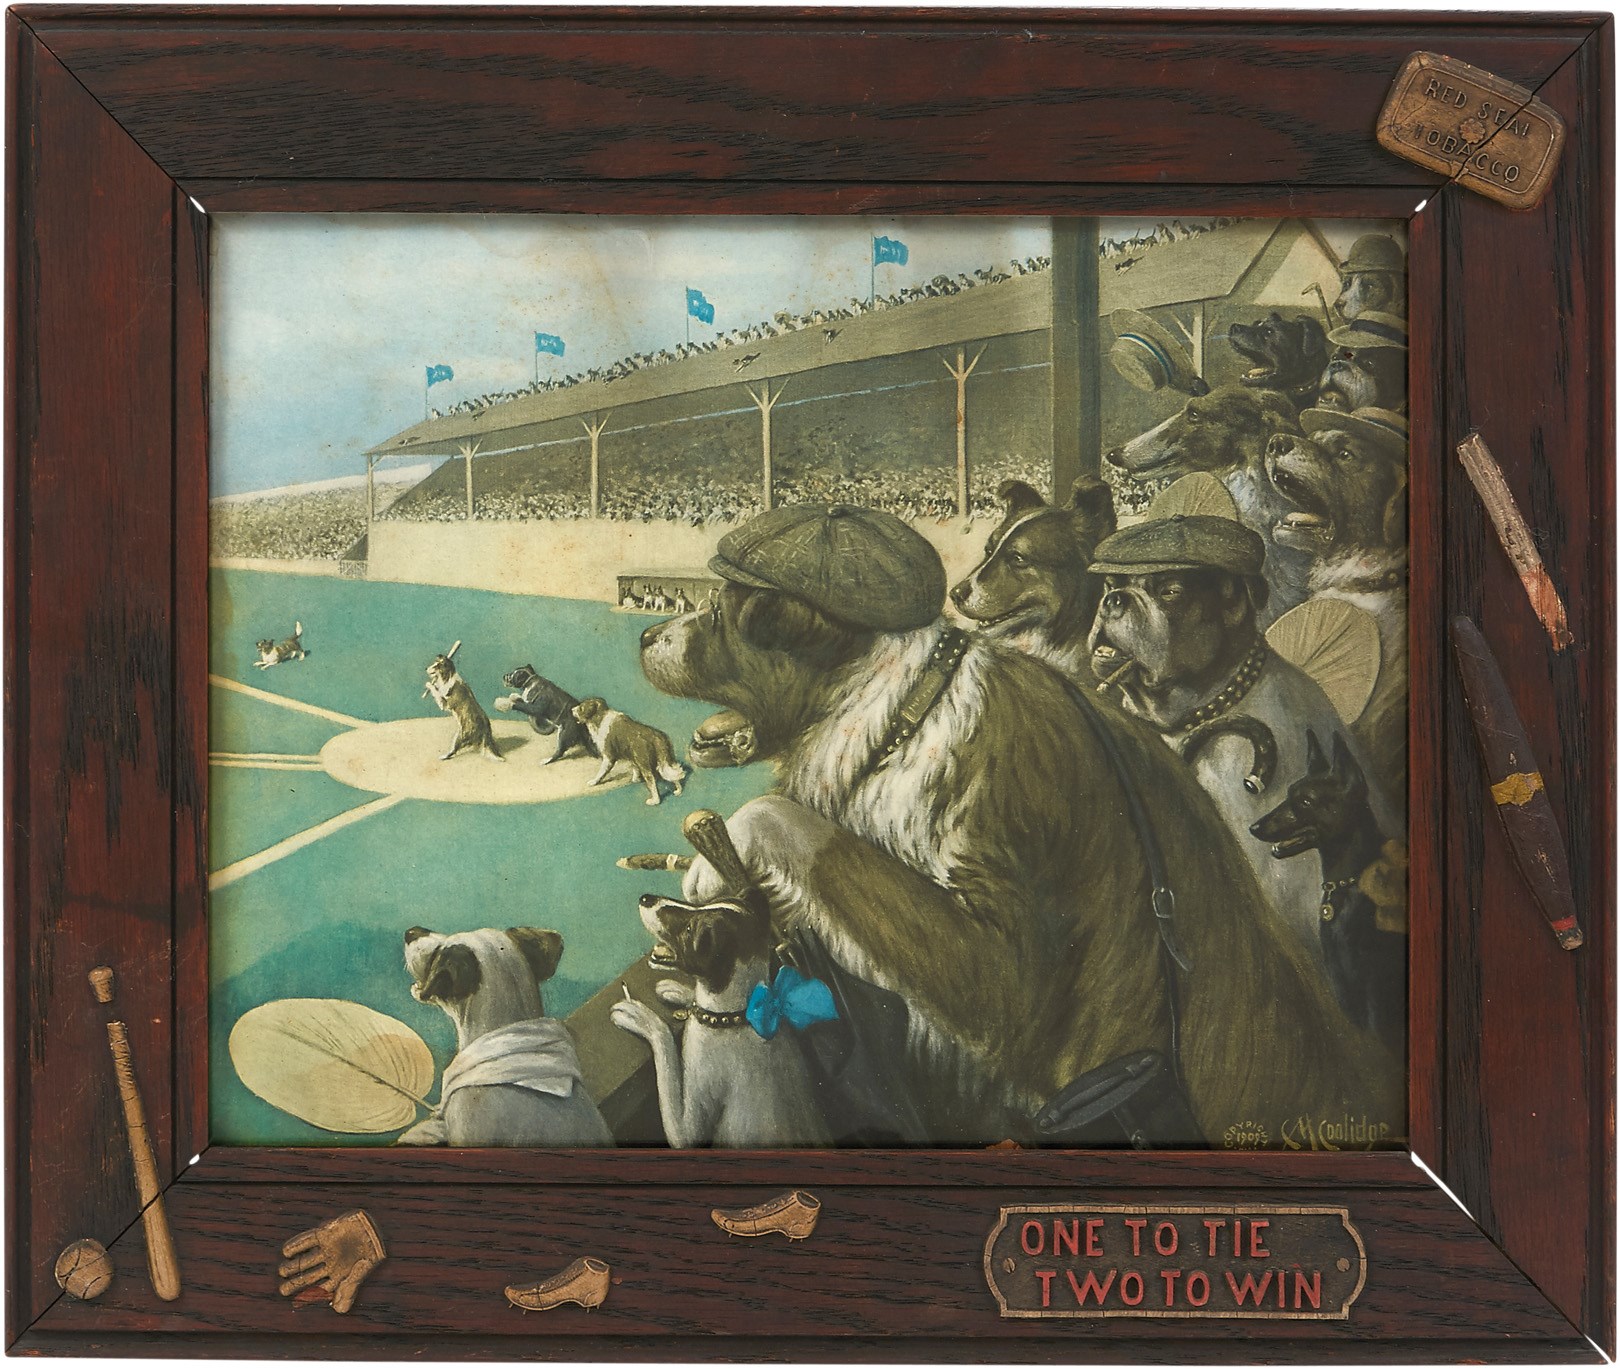 Baseball Memorabilia - 1909 Dogs Playing Baseball Print in Original Tobacco Advertising Frame